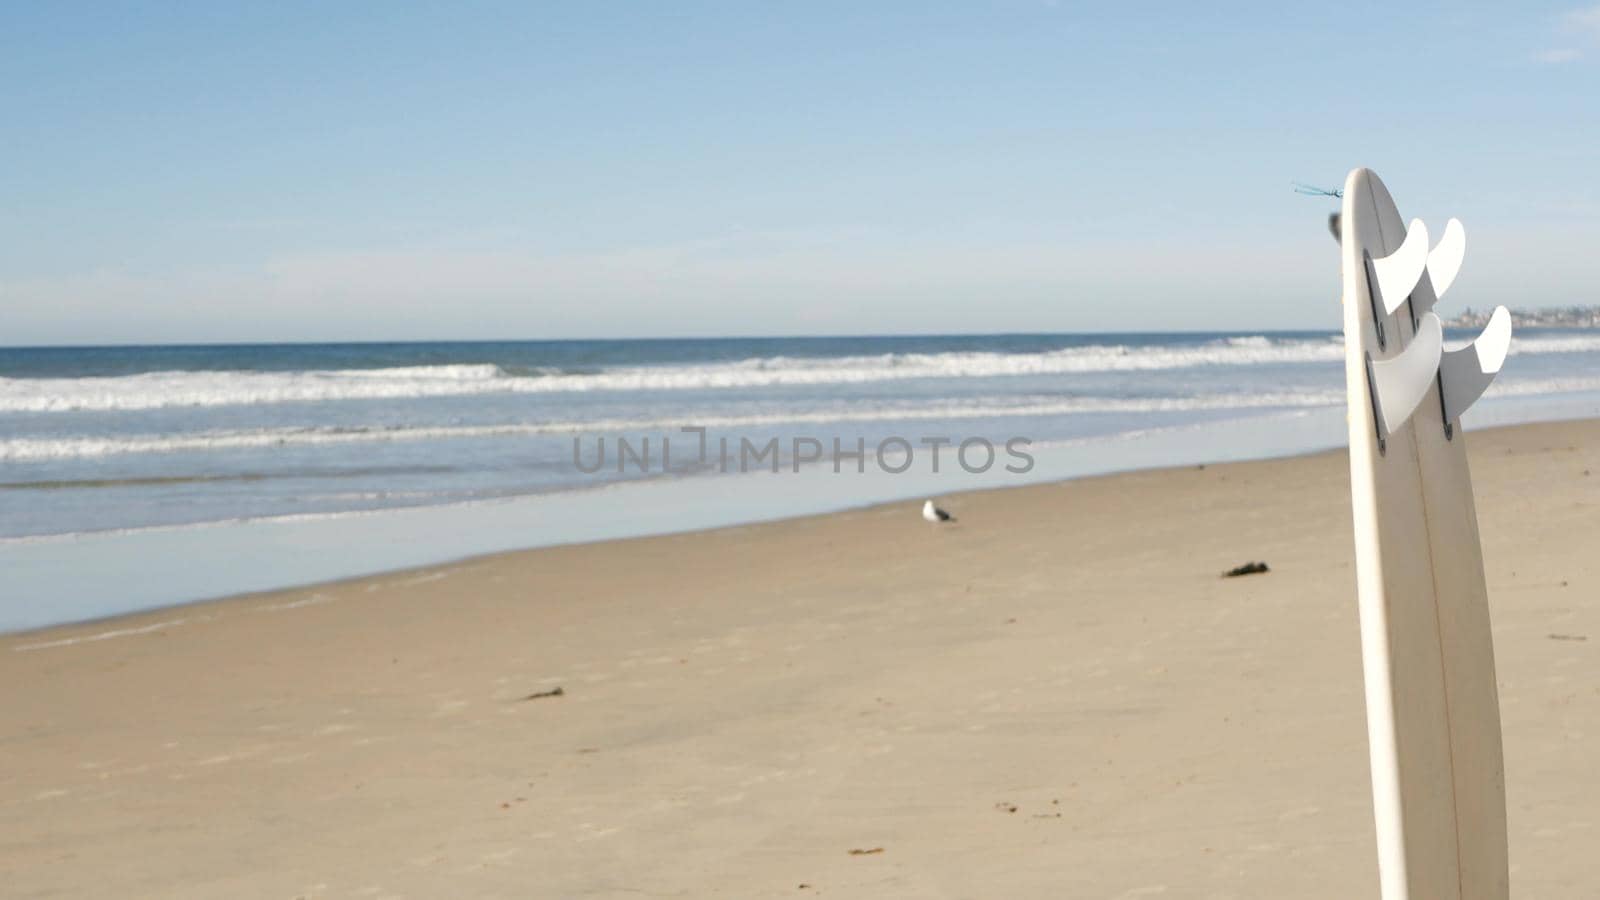 Surfboard for surfing standing on beach sand, California coast, USA. Ocean waves by DogoraSun